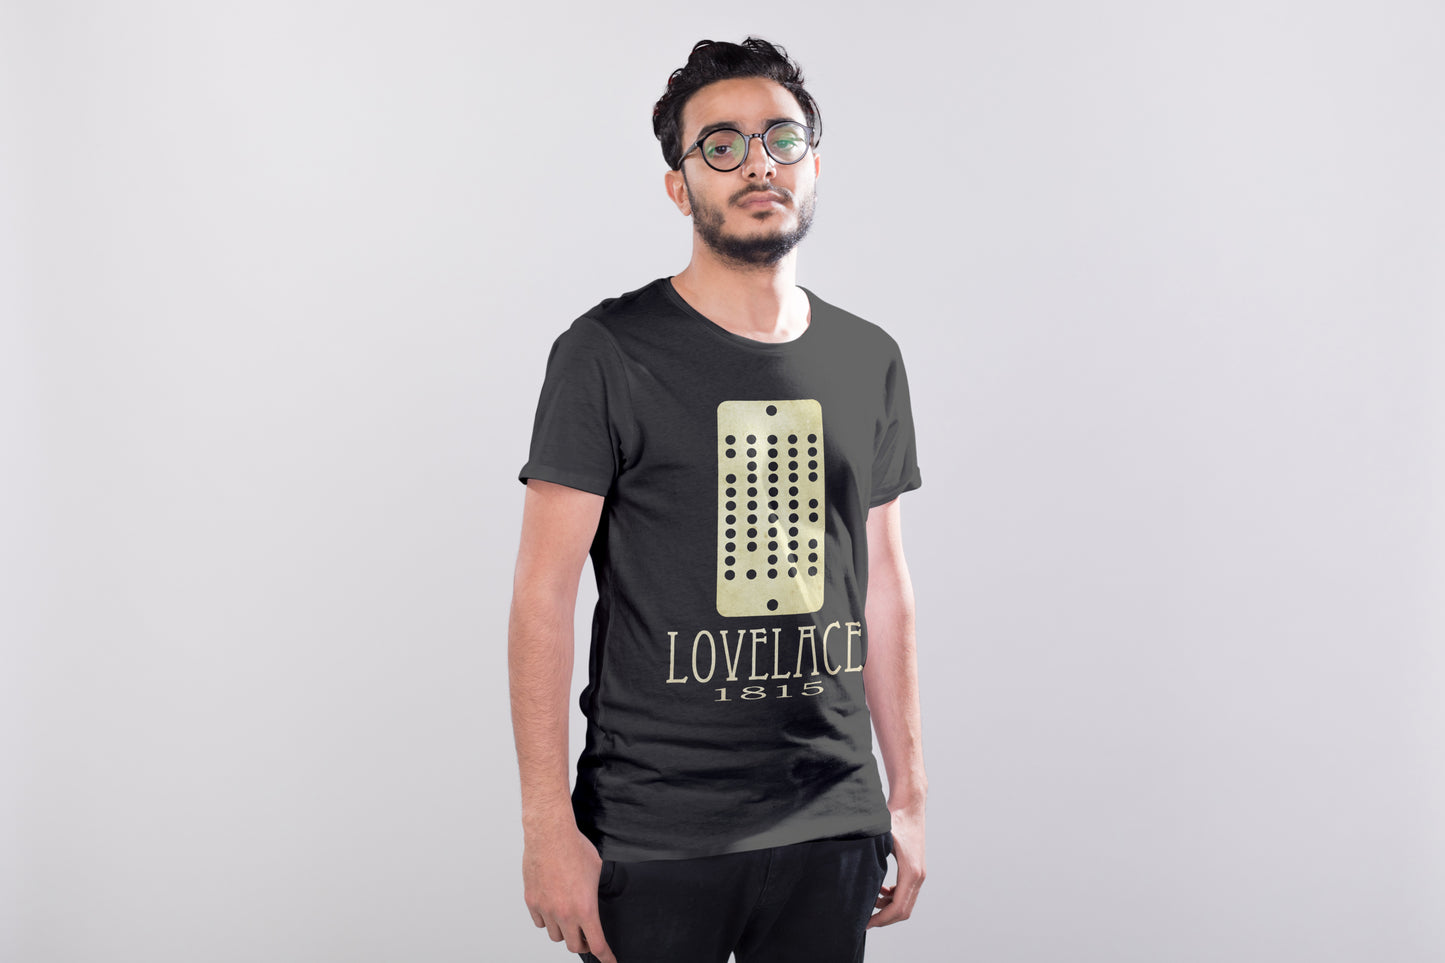 Lovelace Computer Science T-shirt, Ada Lovelace Programmer Punch Card Graphic Tee